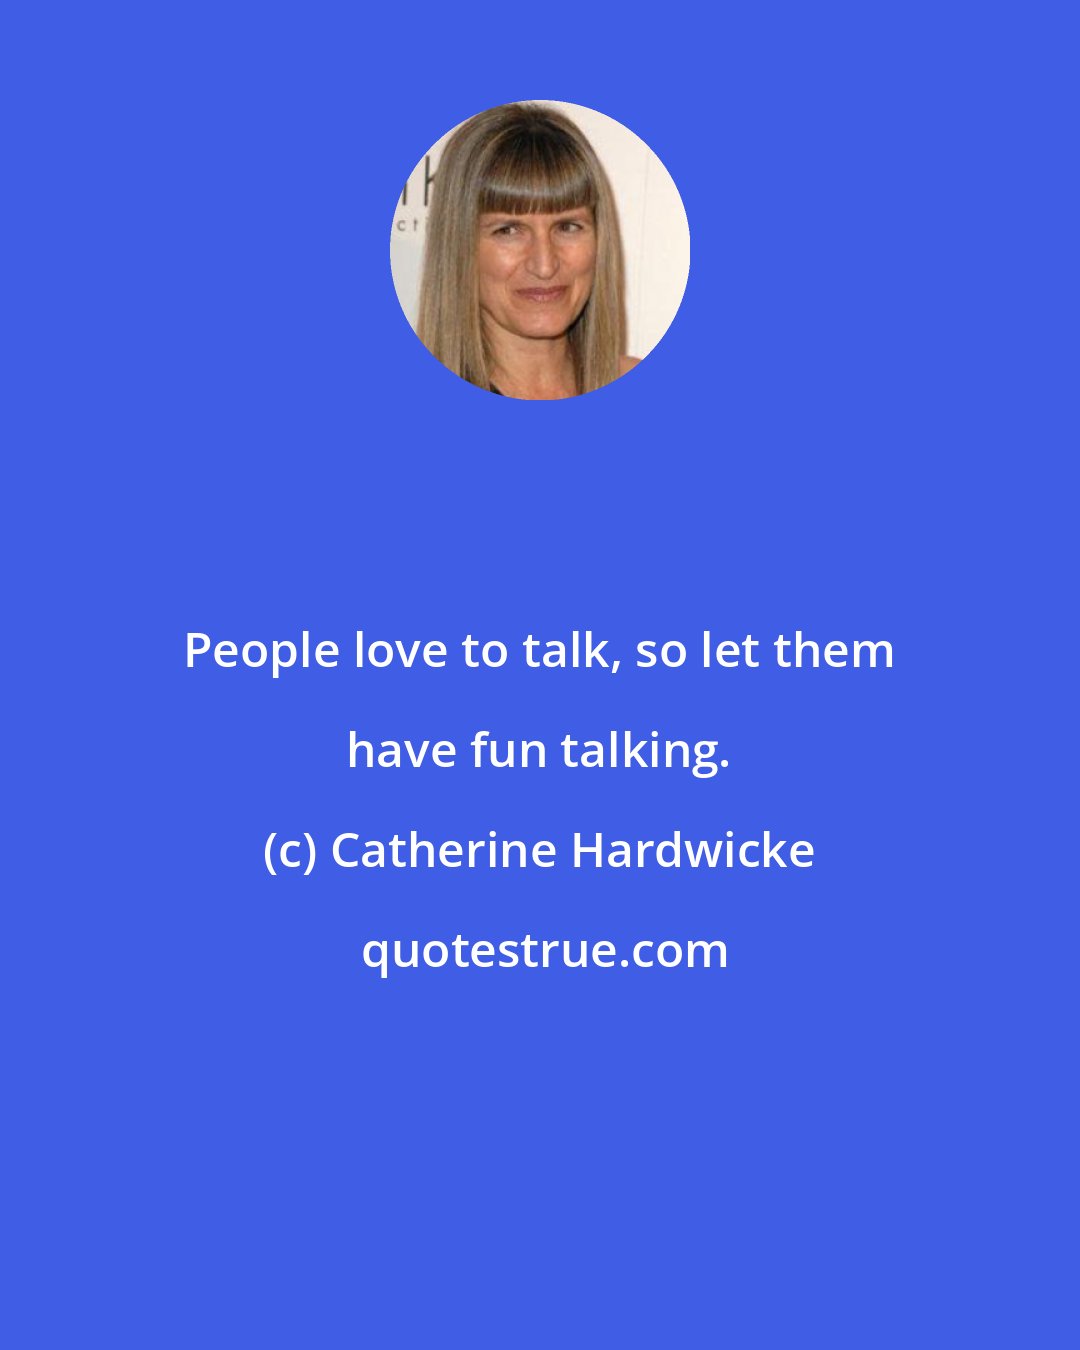 Catherine Hardwicke: People love to talk, so let them have fun talking.